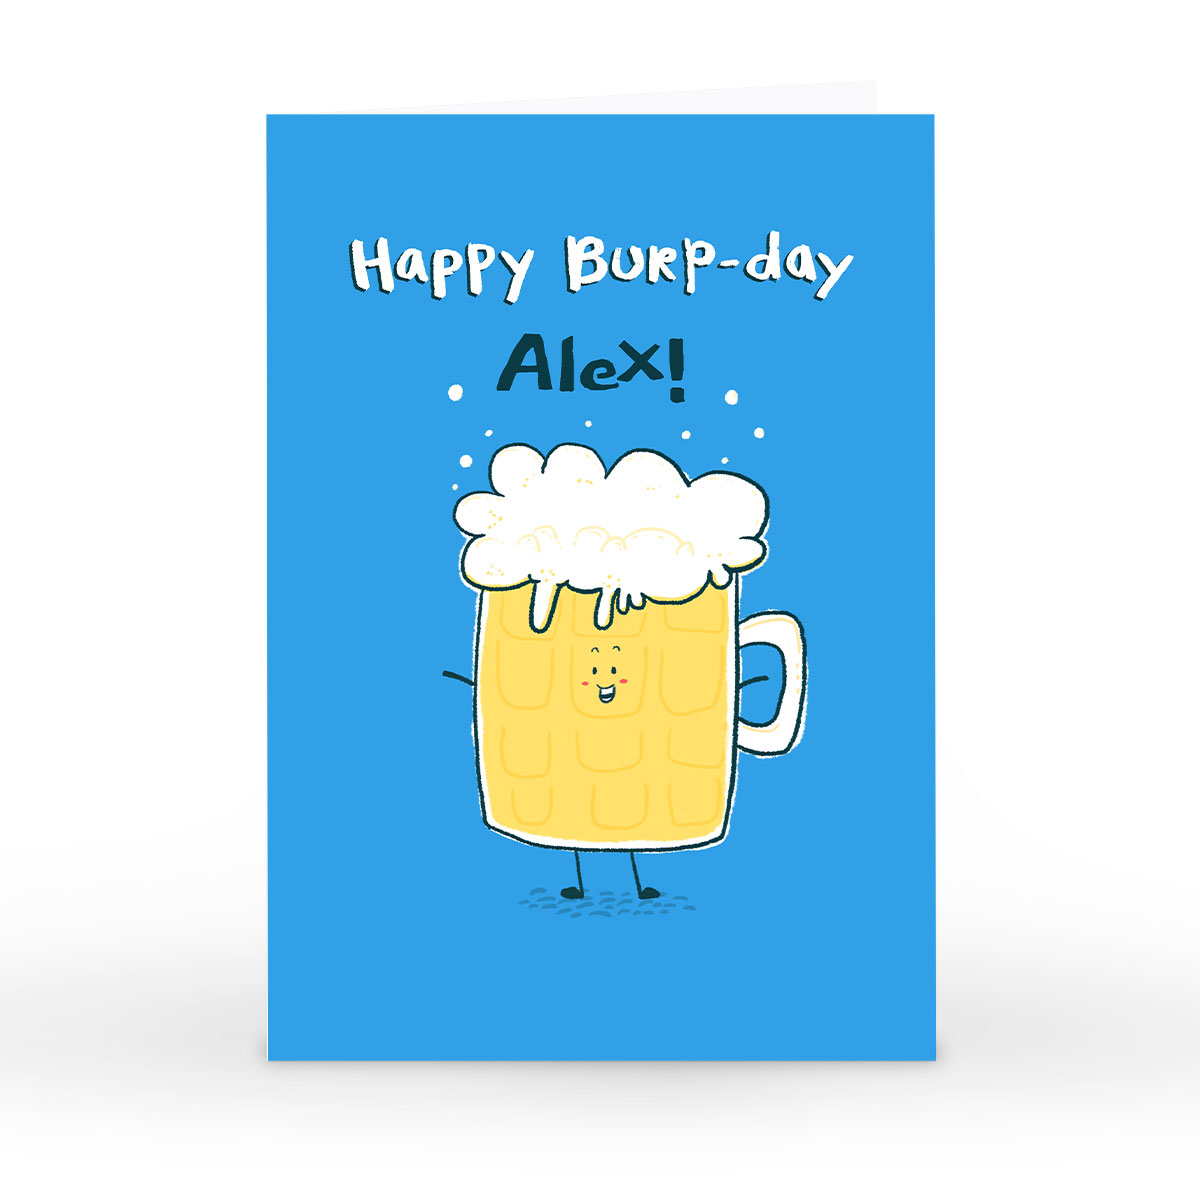 Personalised Hew Ma Birthday Card - Happy Burp-day!  